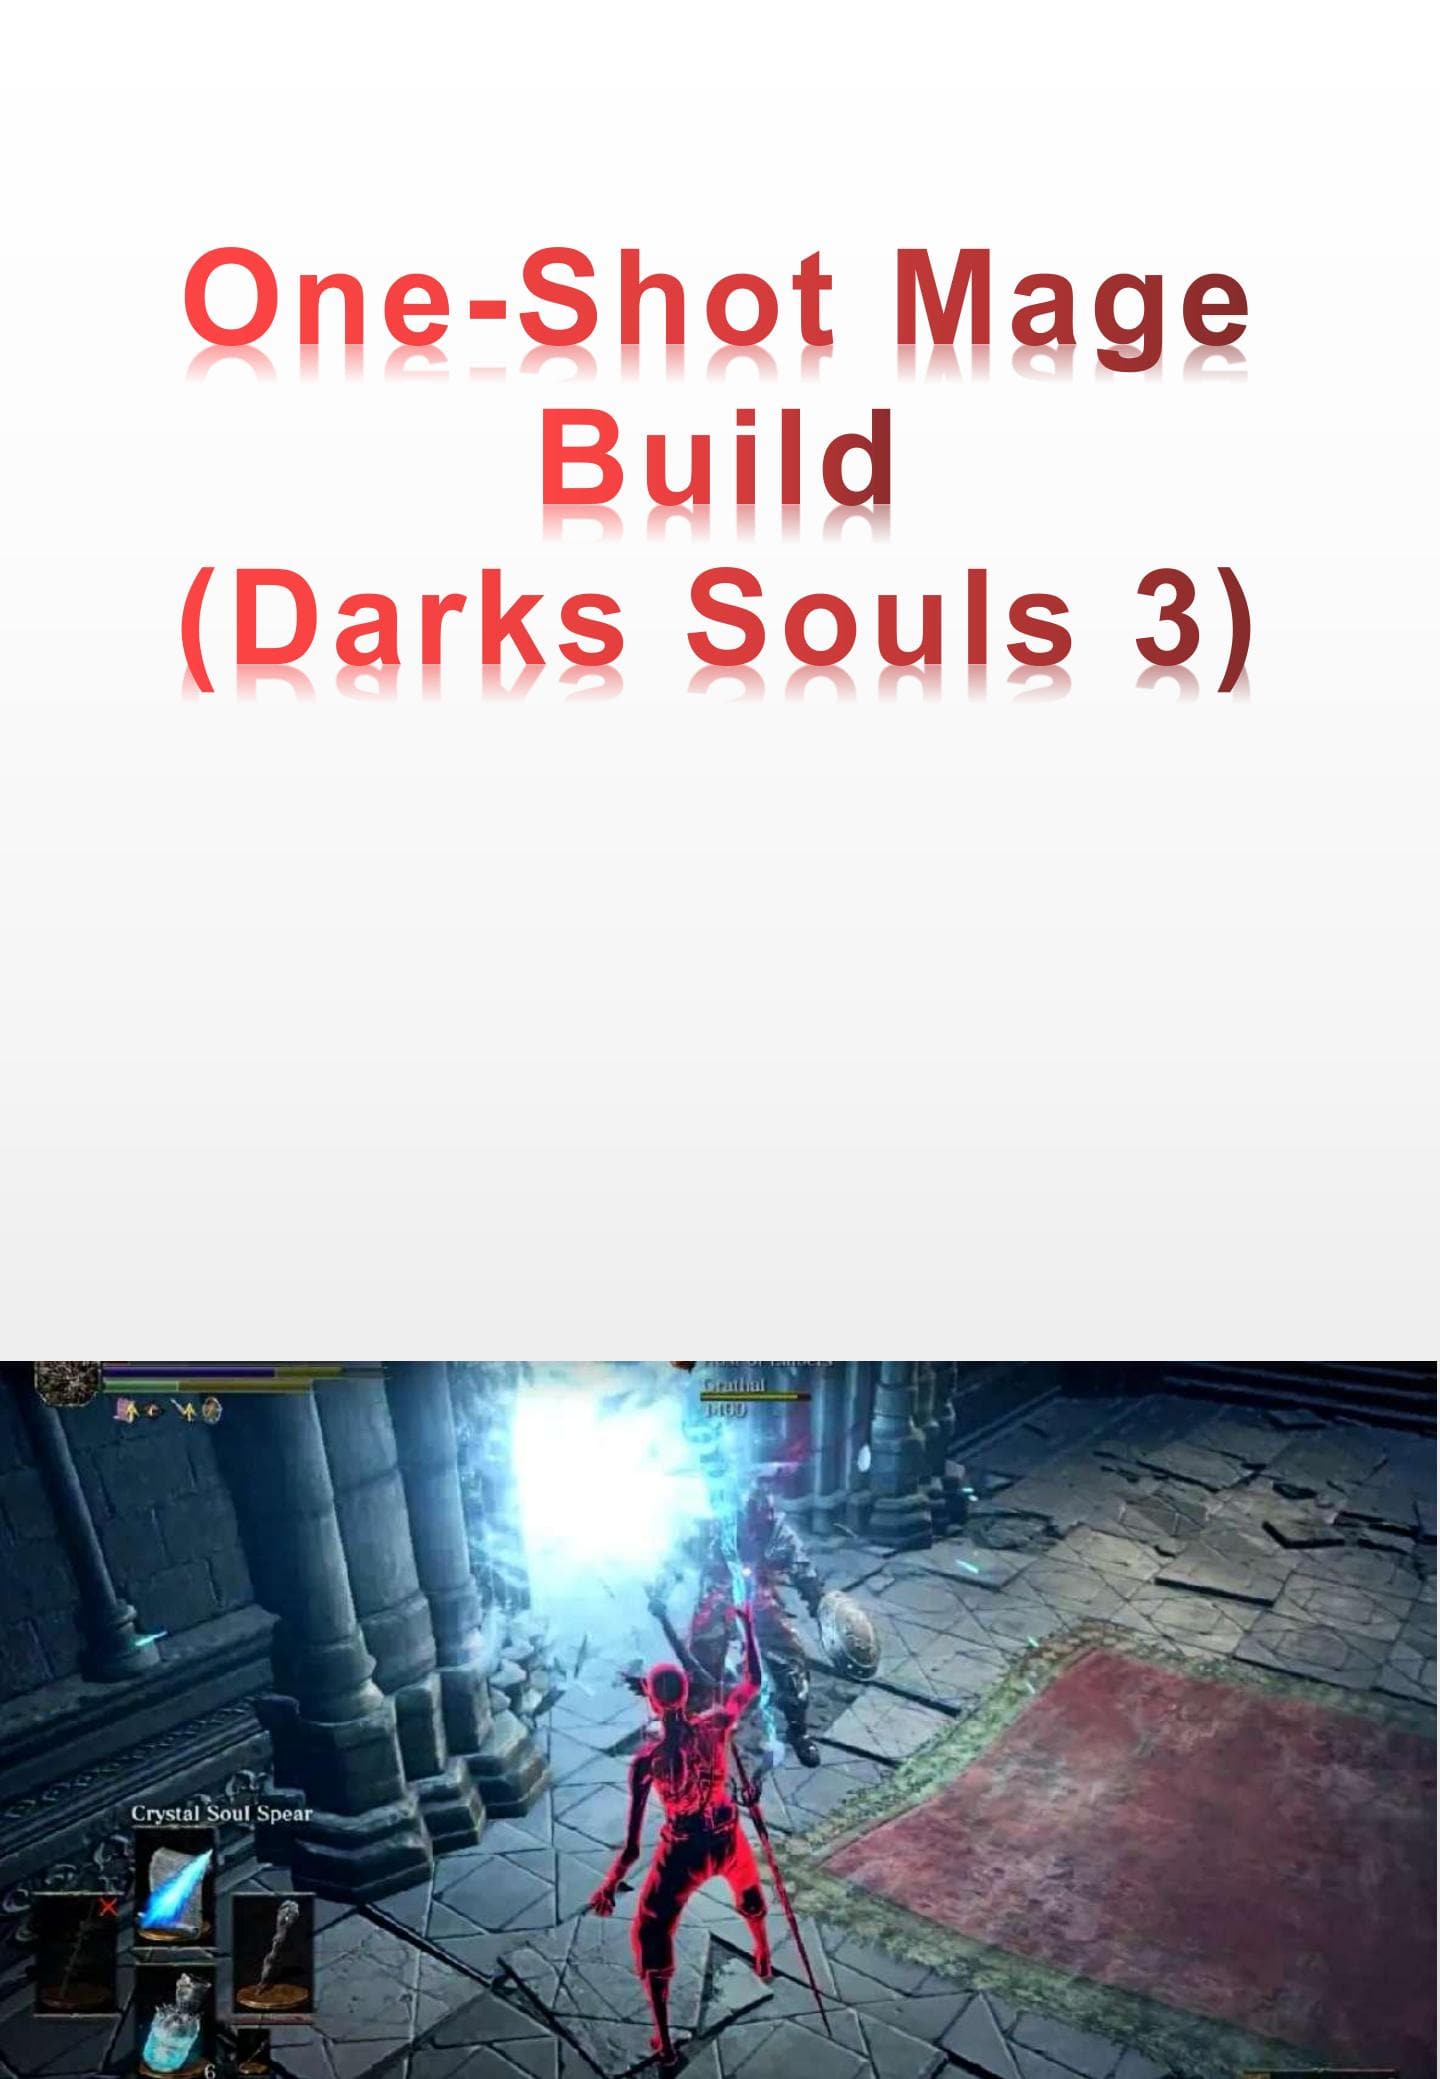 One-Shot Mage Build - (Darks Souls 3)